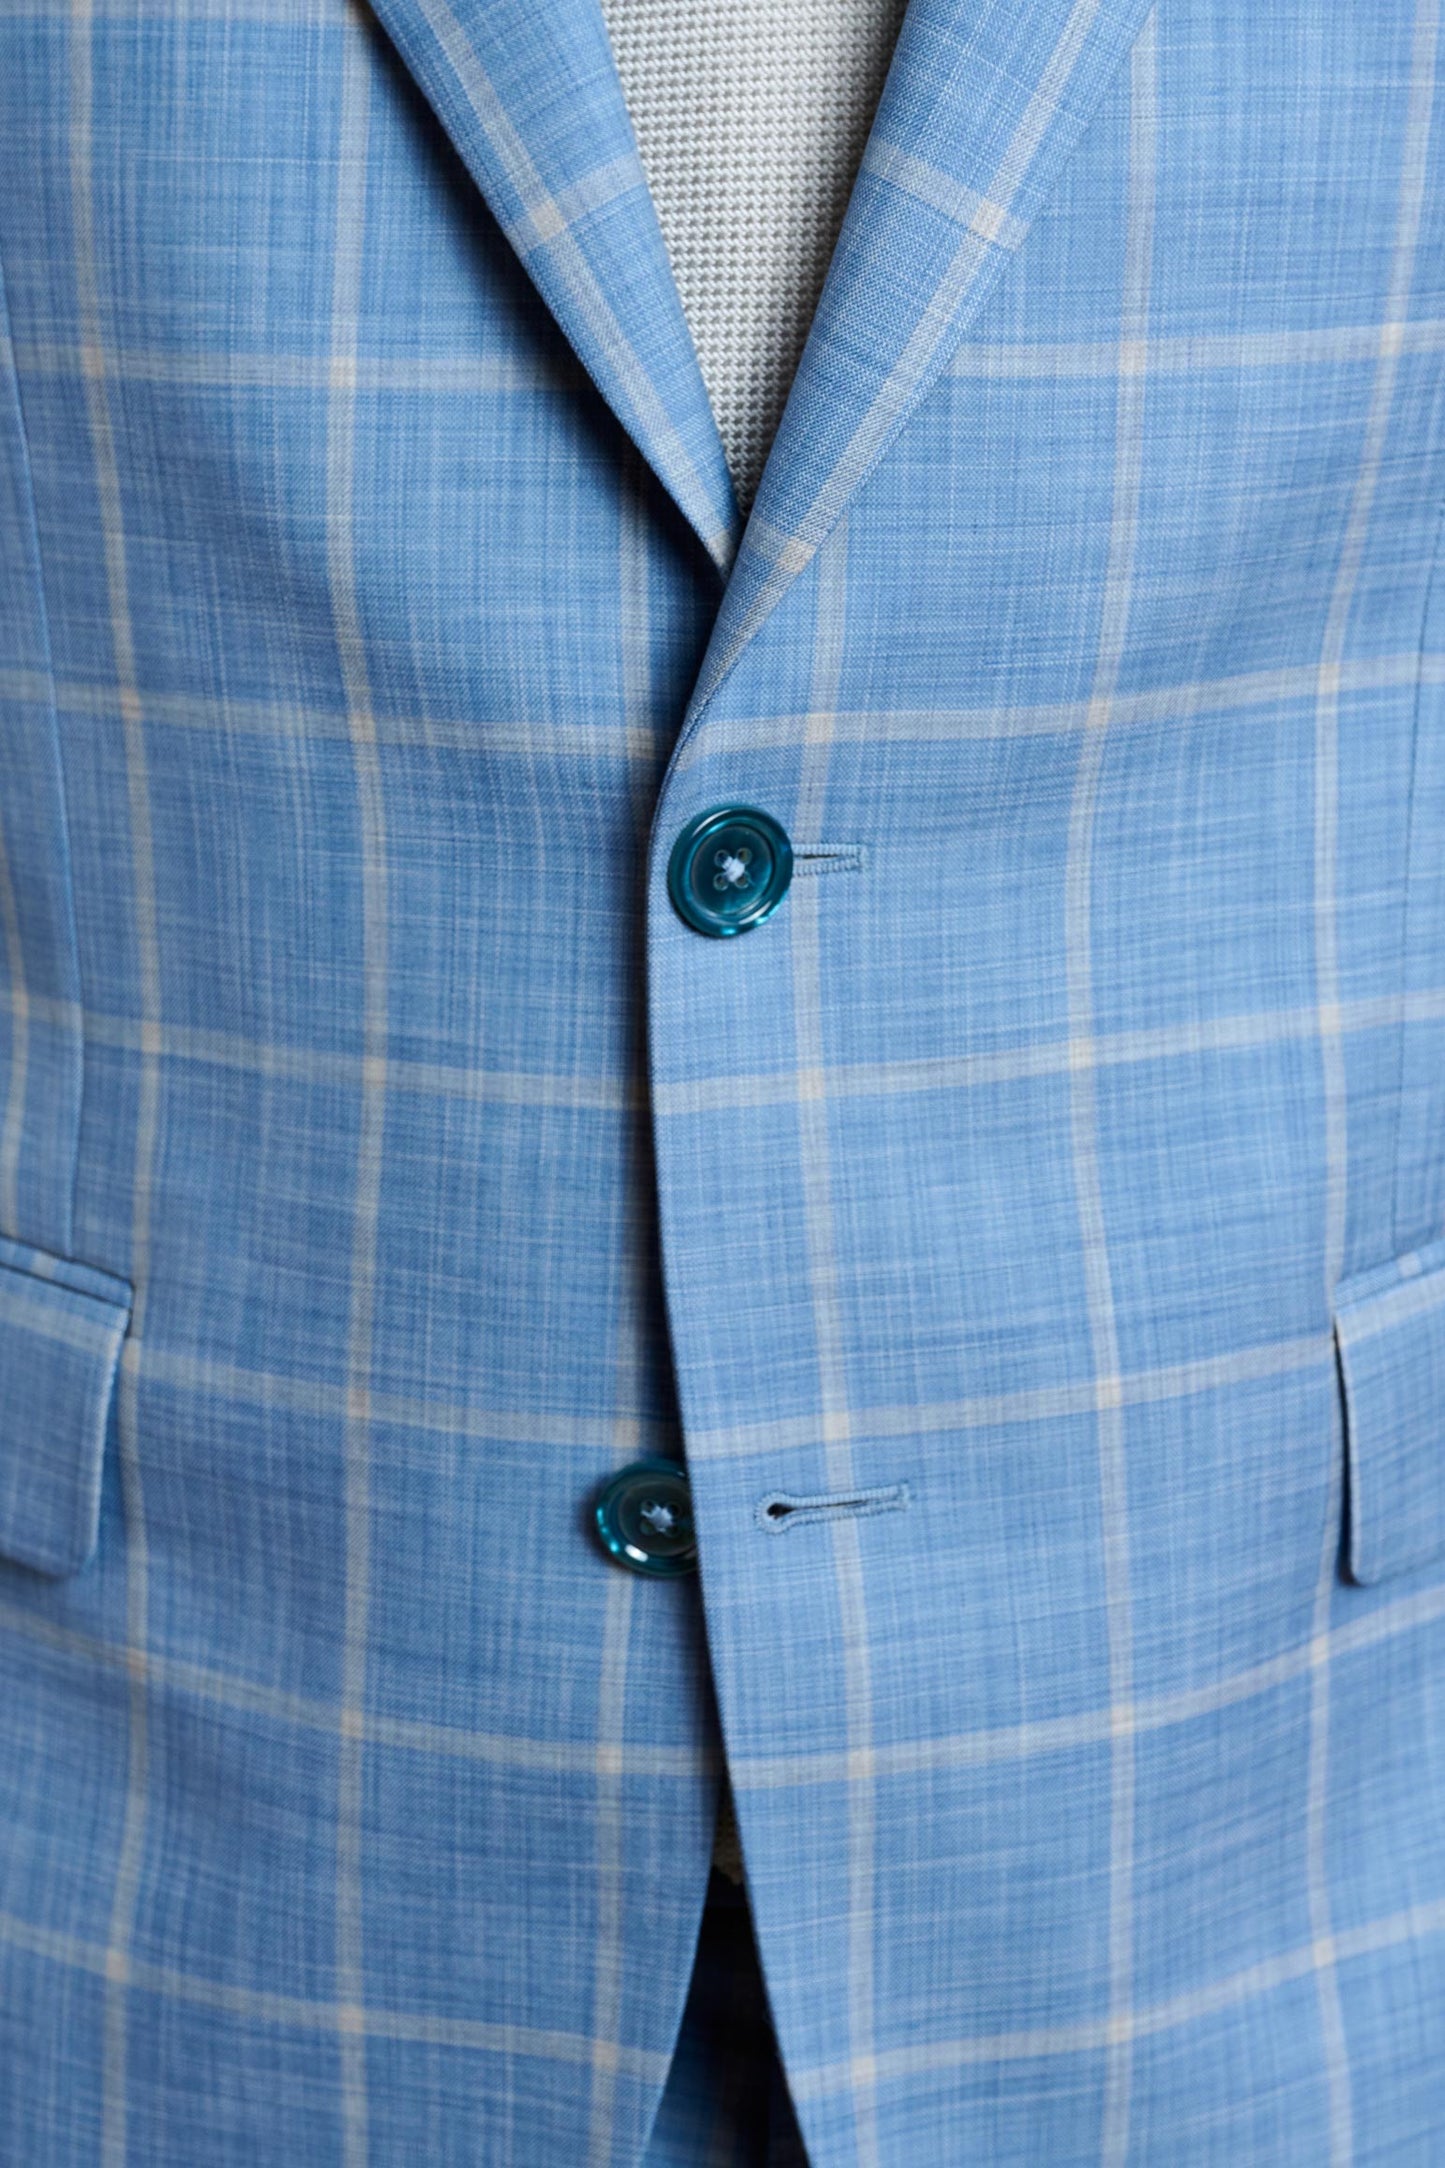 Soho-Anzug in elegantem Hellblau mit Karomuster